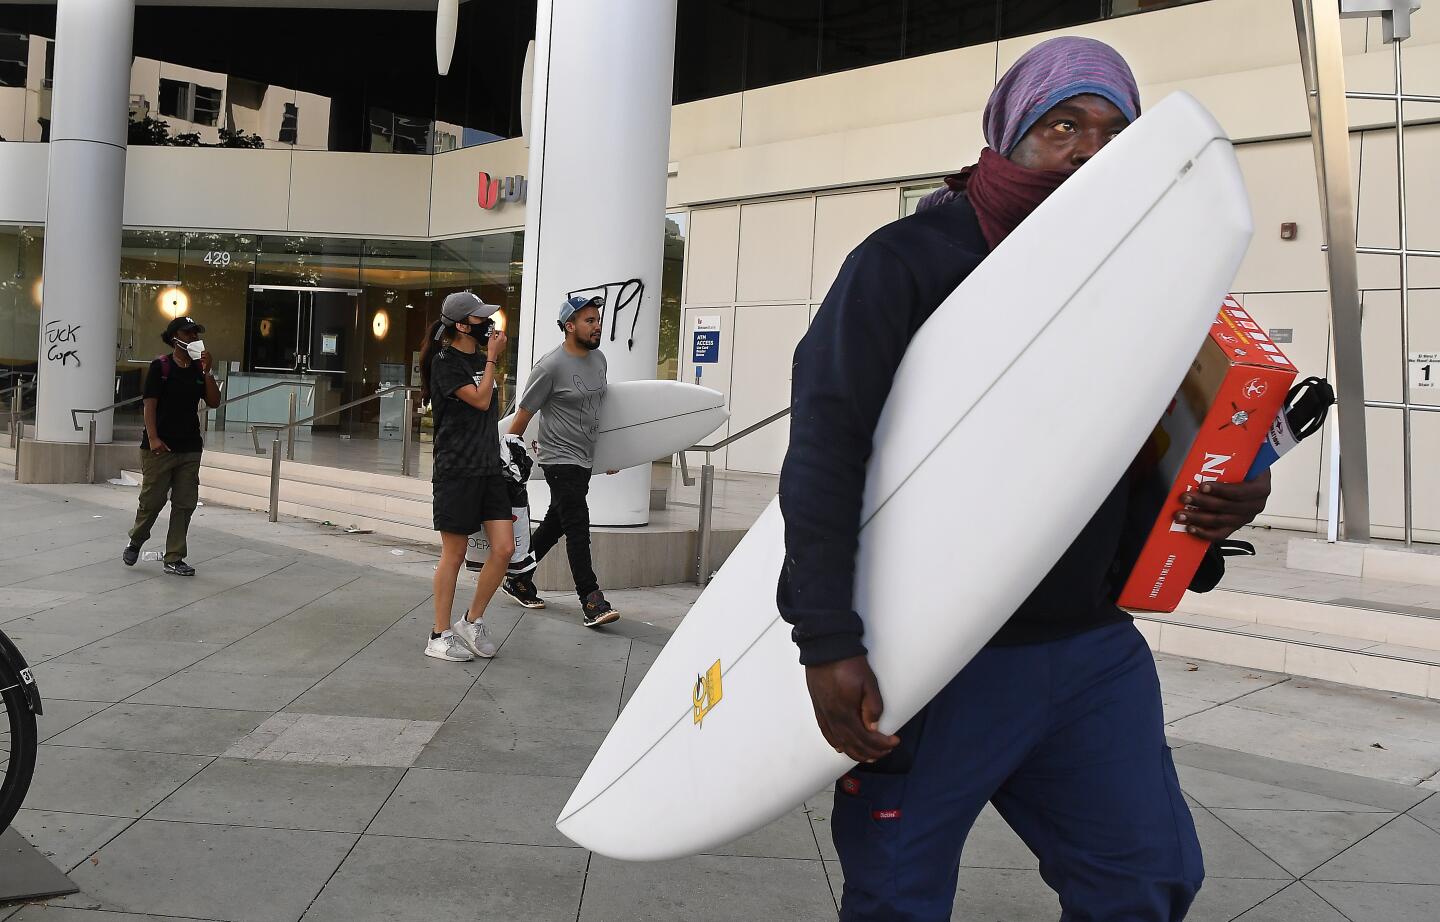 People walk away with stolen surfboards in Santa Monica on Sunday